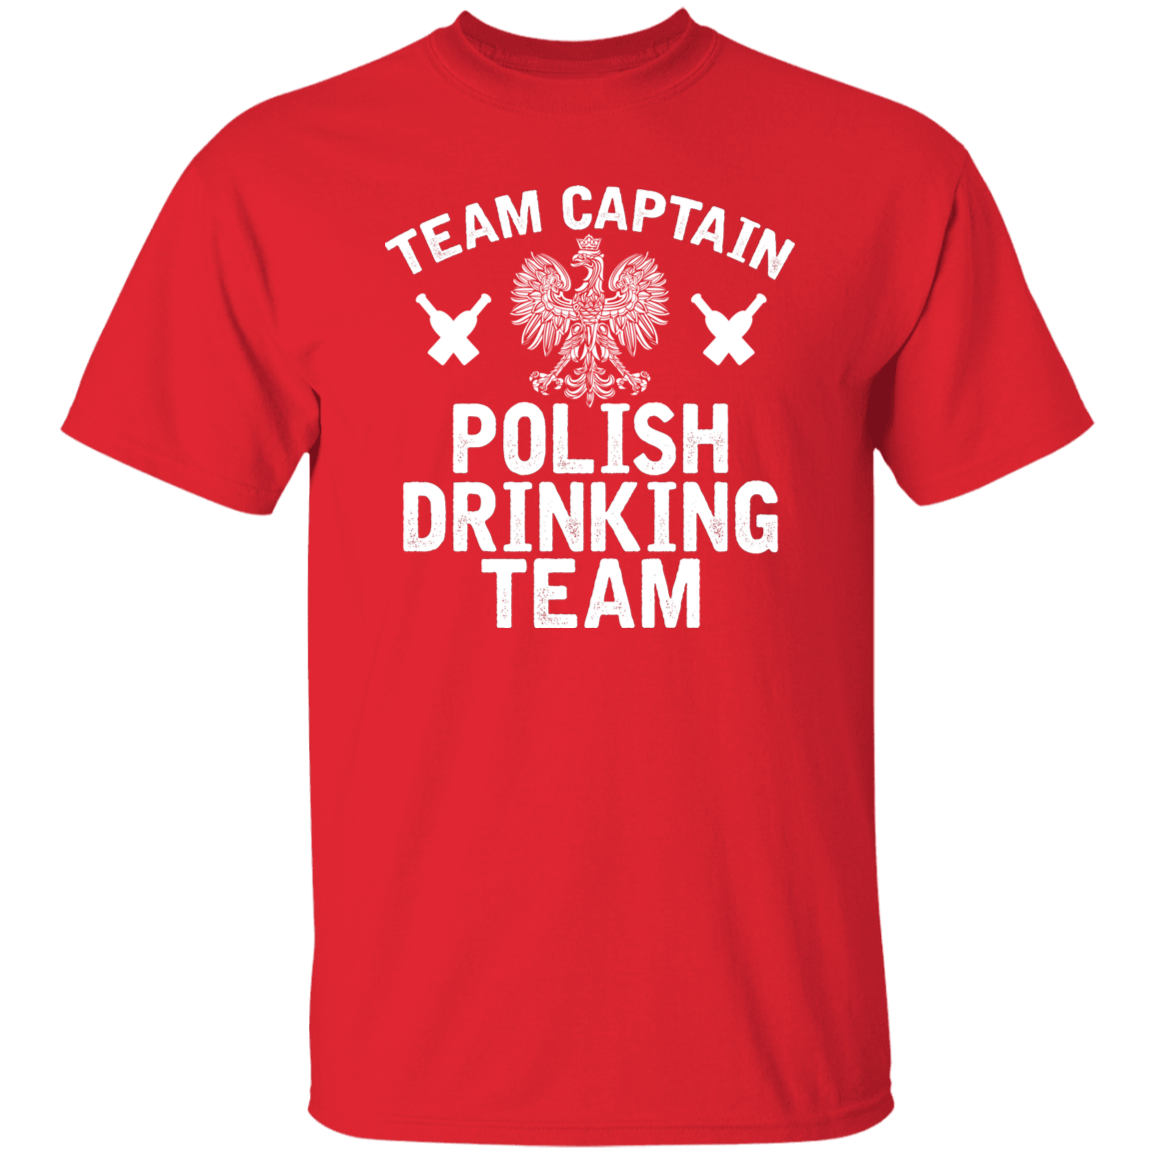 Team Captain Polish Drinking Team Apparel CustomCat G500 5.3 oz. T-Shirt Red S